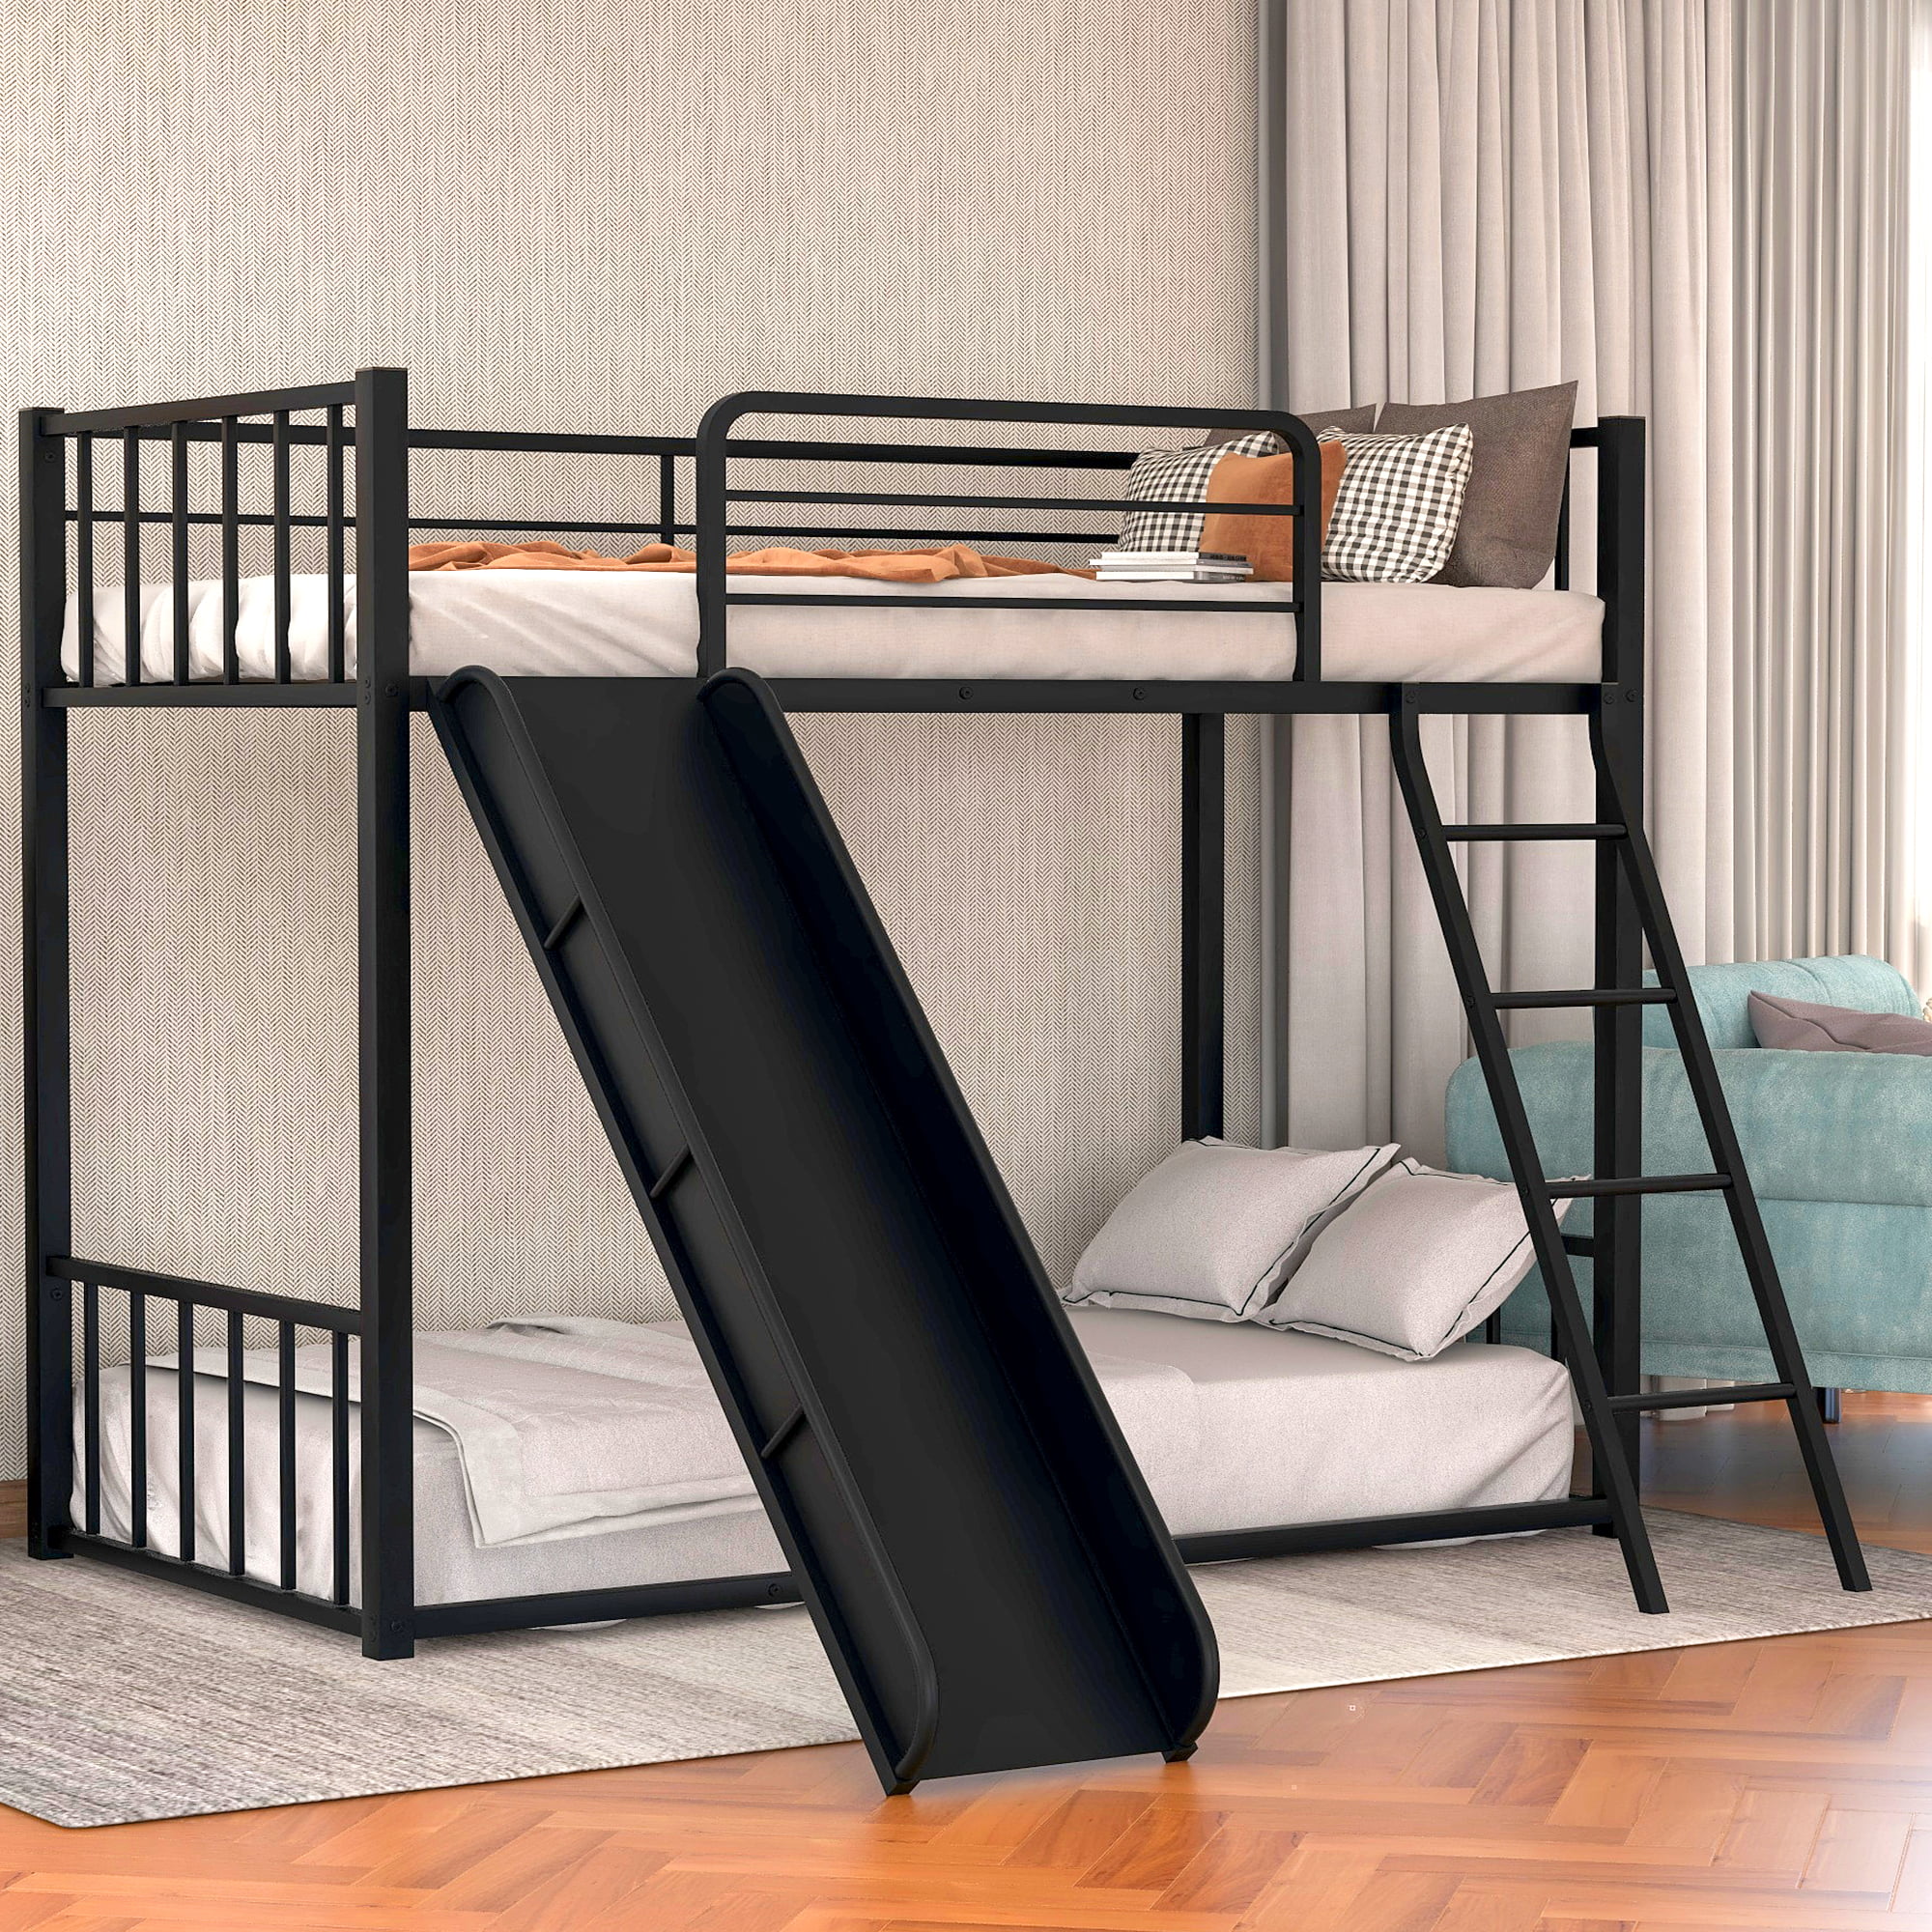 Euroco Metal Bunk Bed Twin Over, Just Bunk Beds